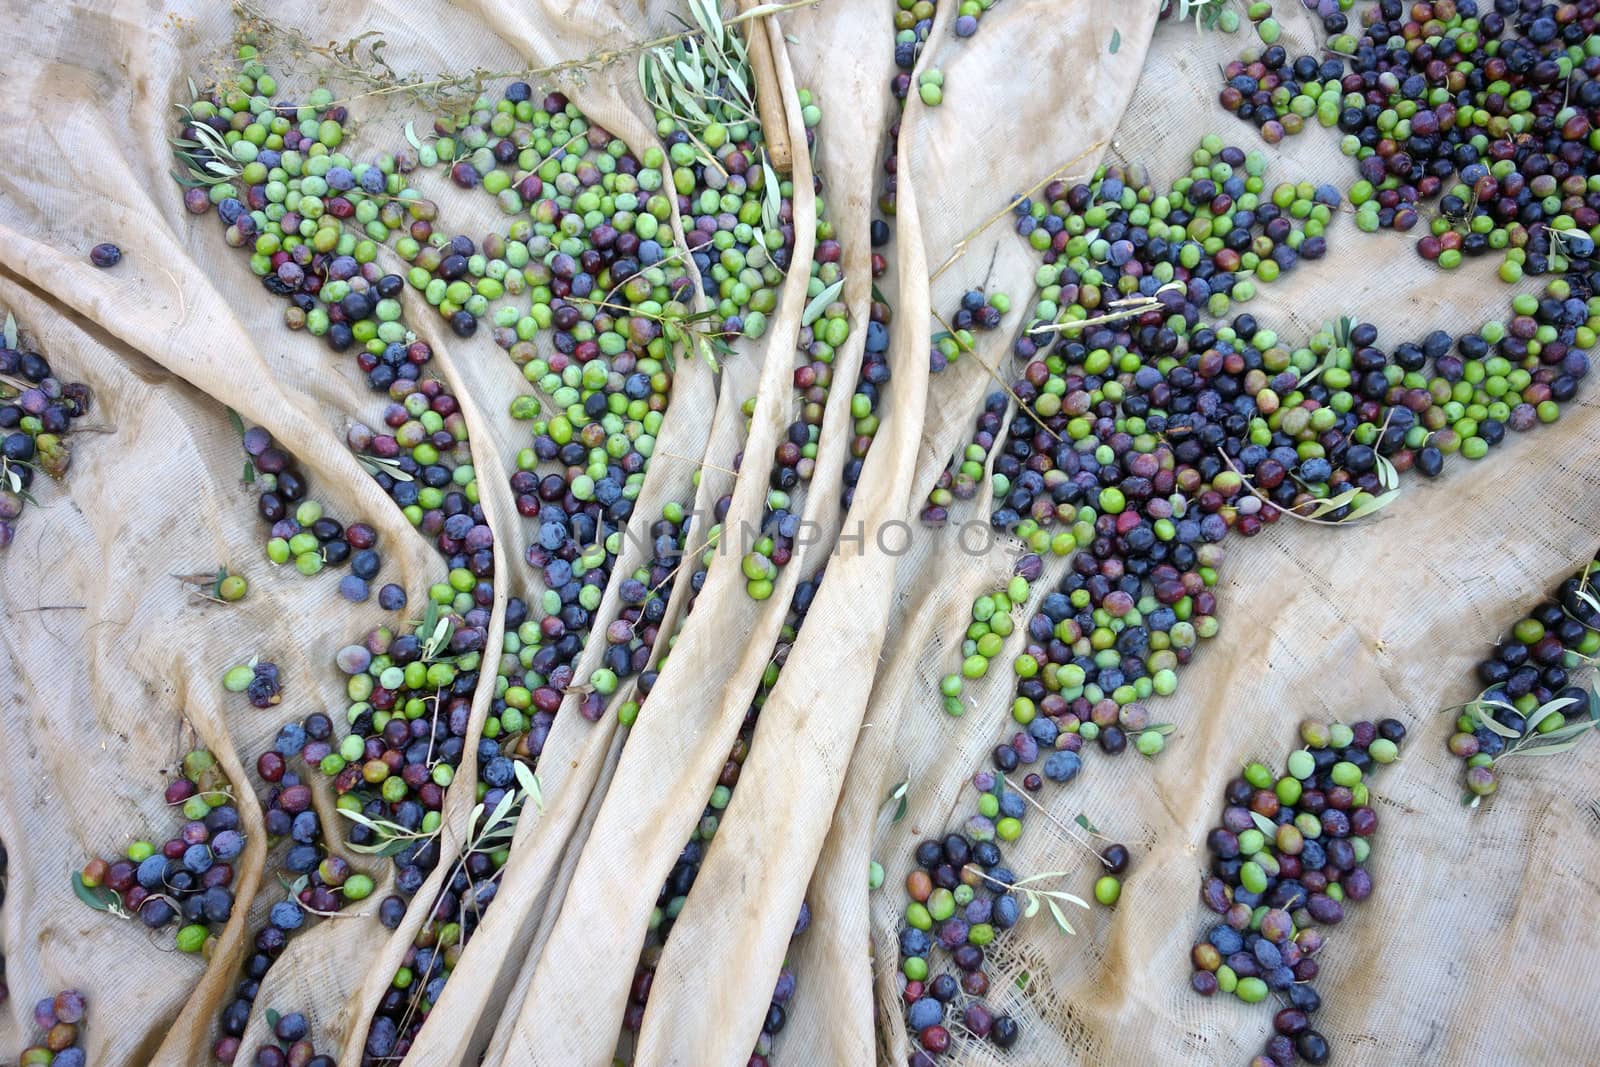 Harvesting olives by Portokalis